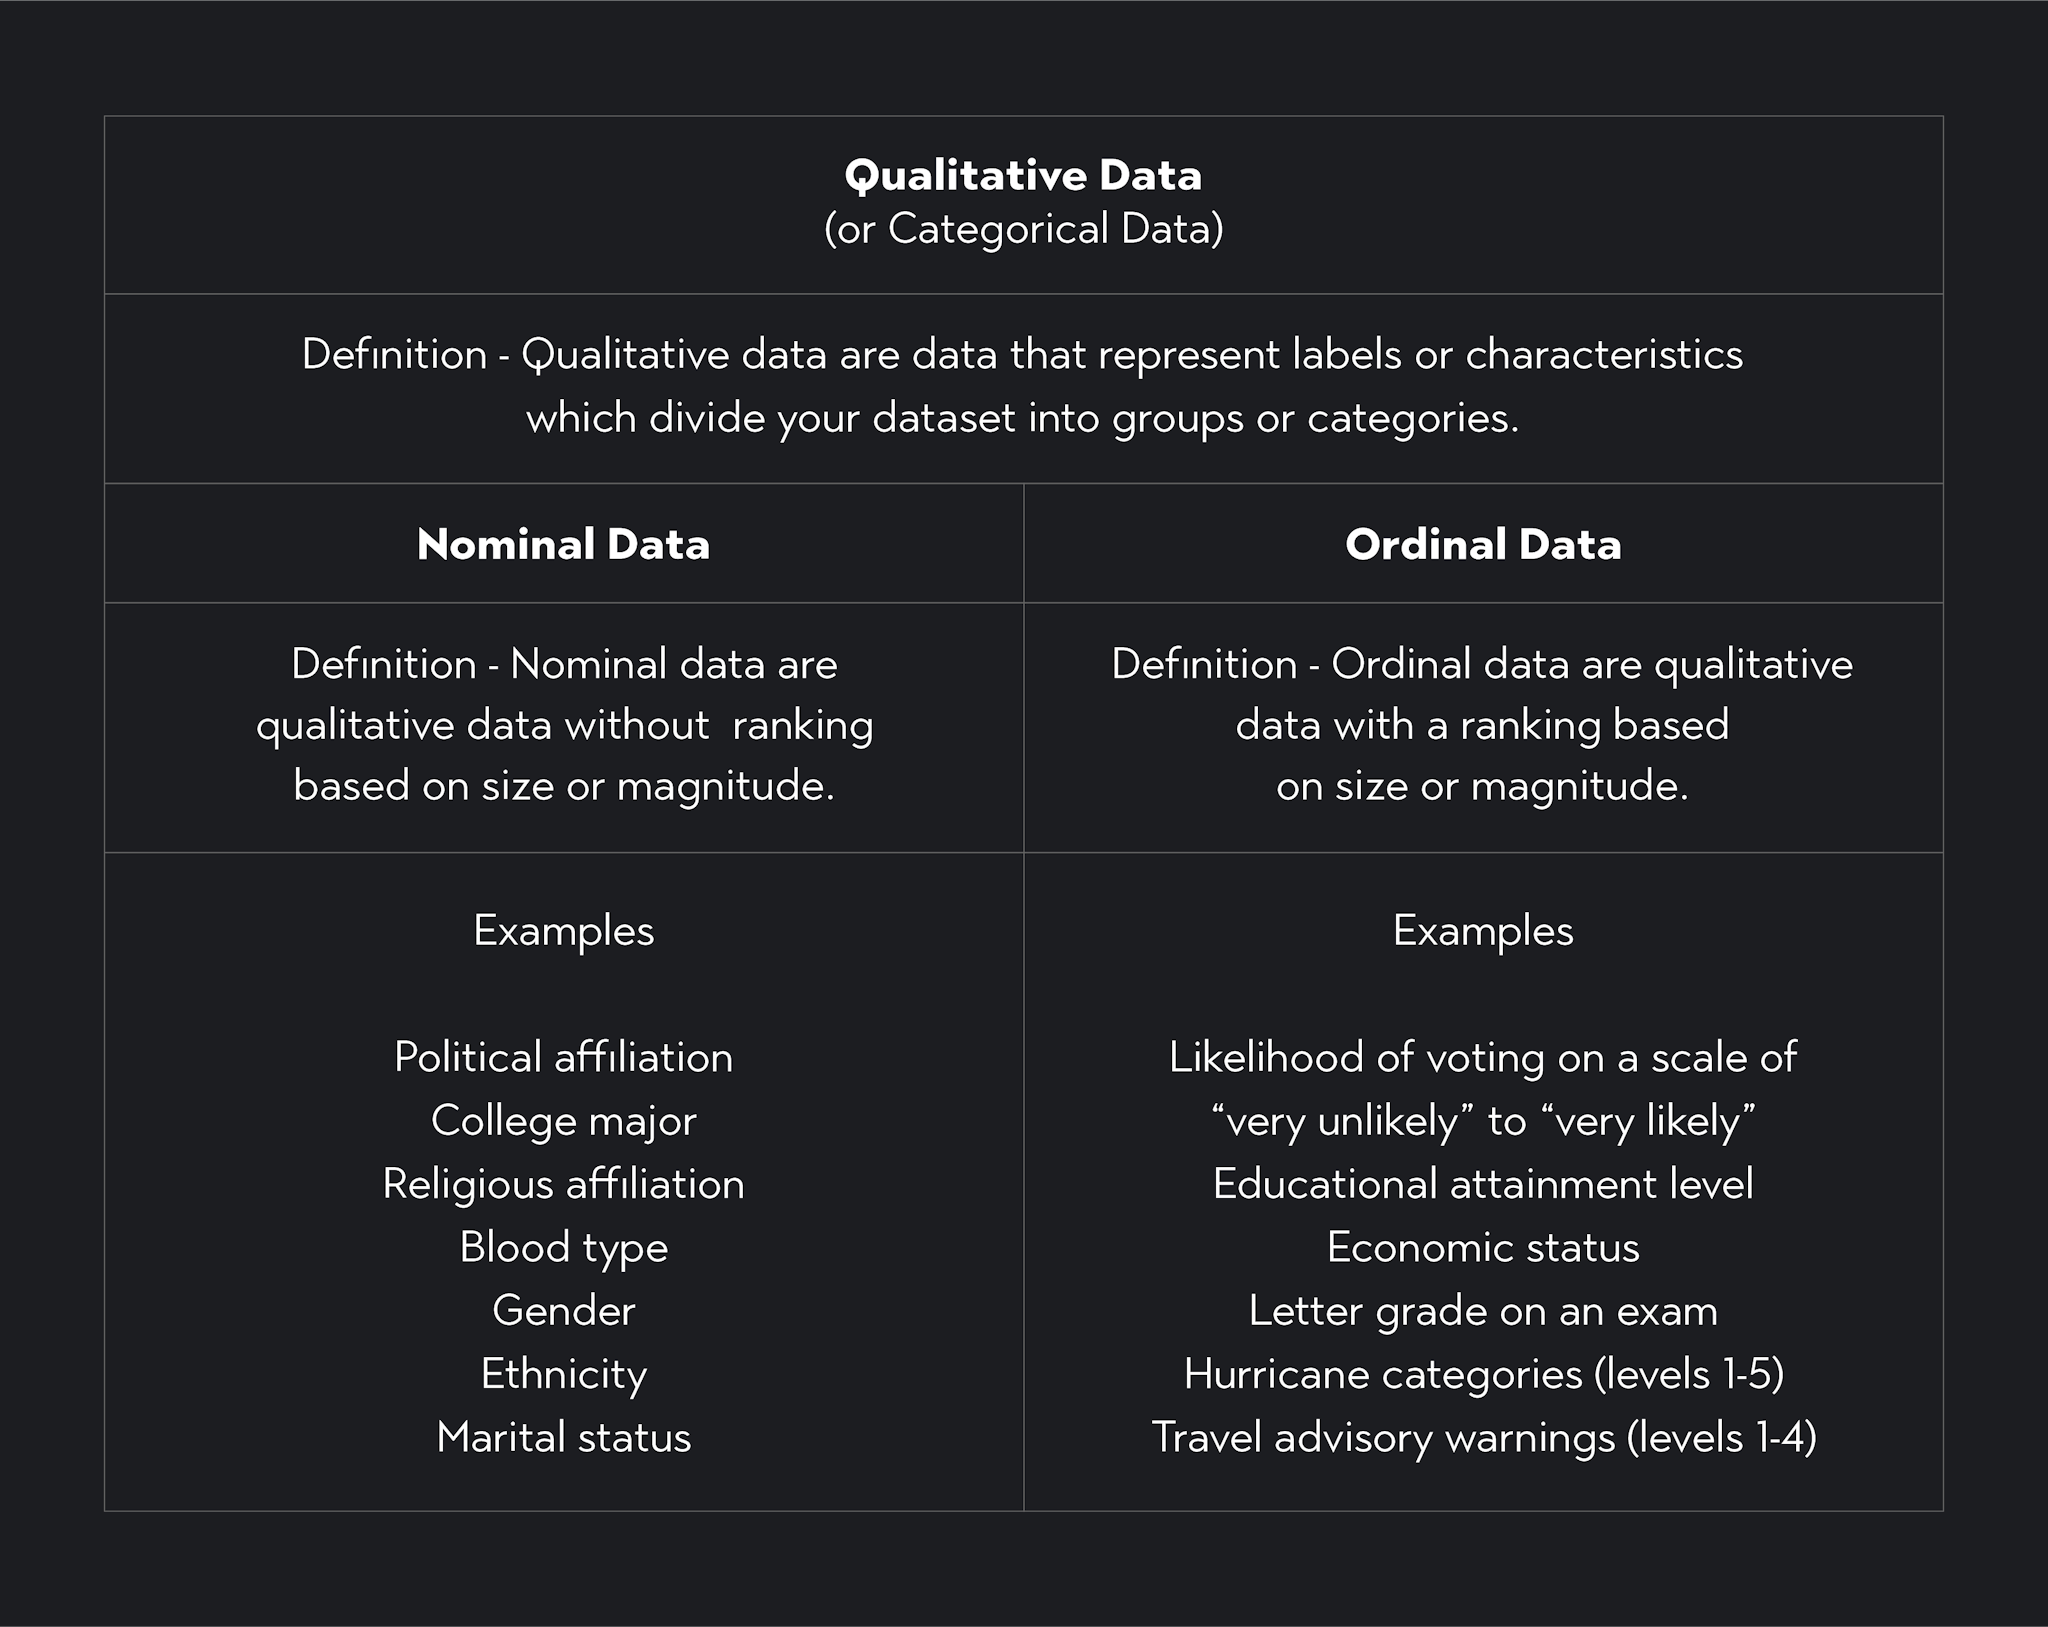 Qualitative Data or Categorical Data